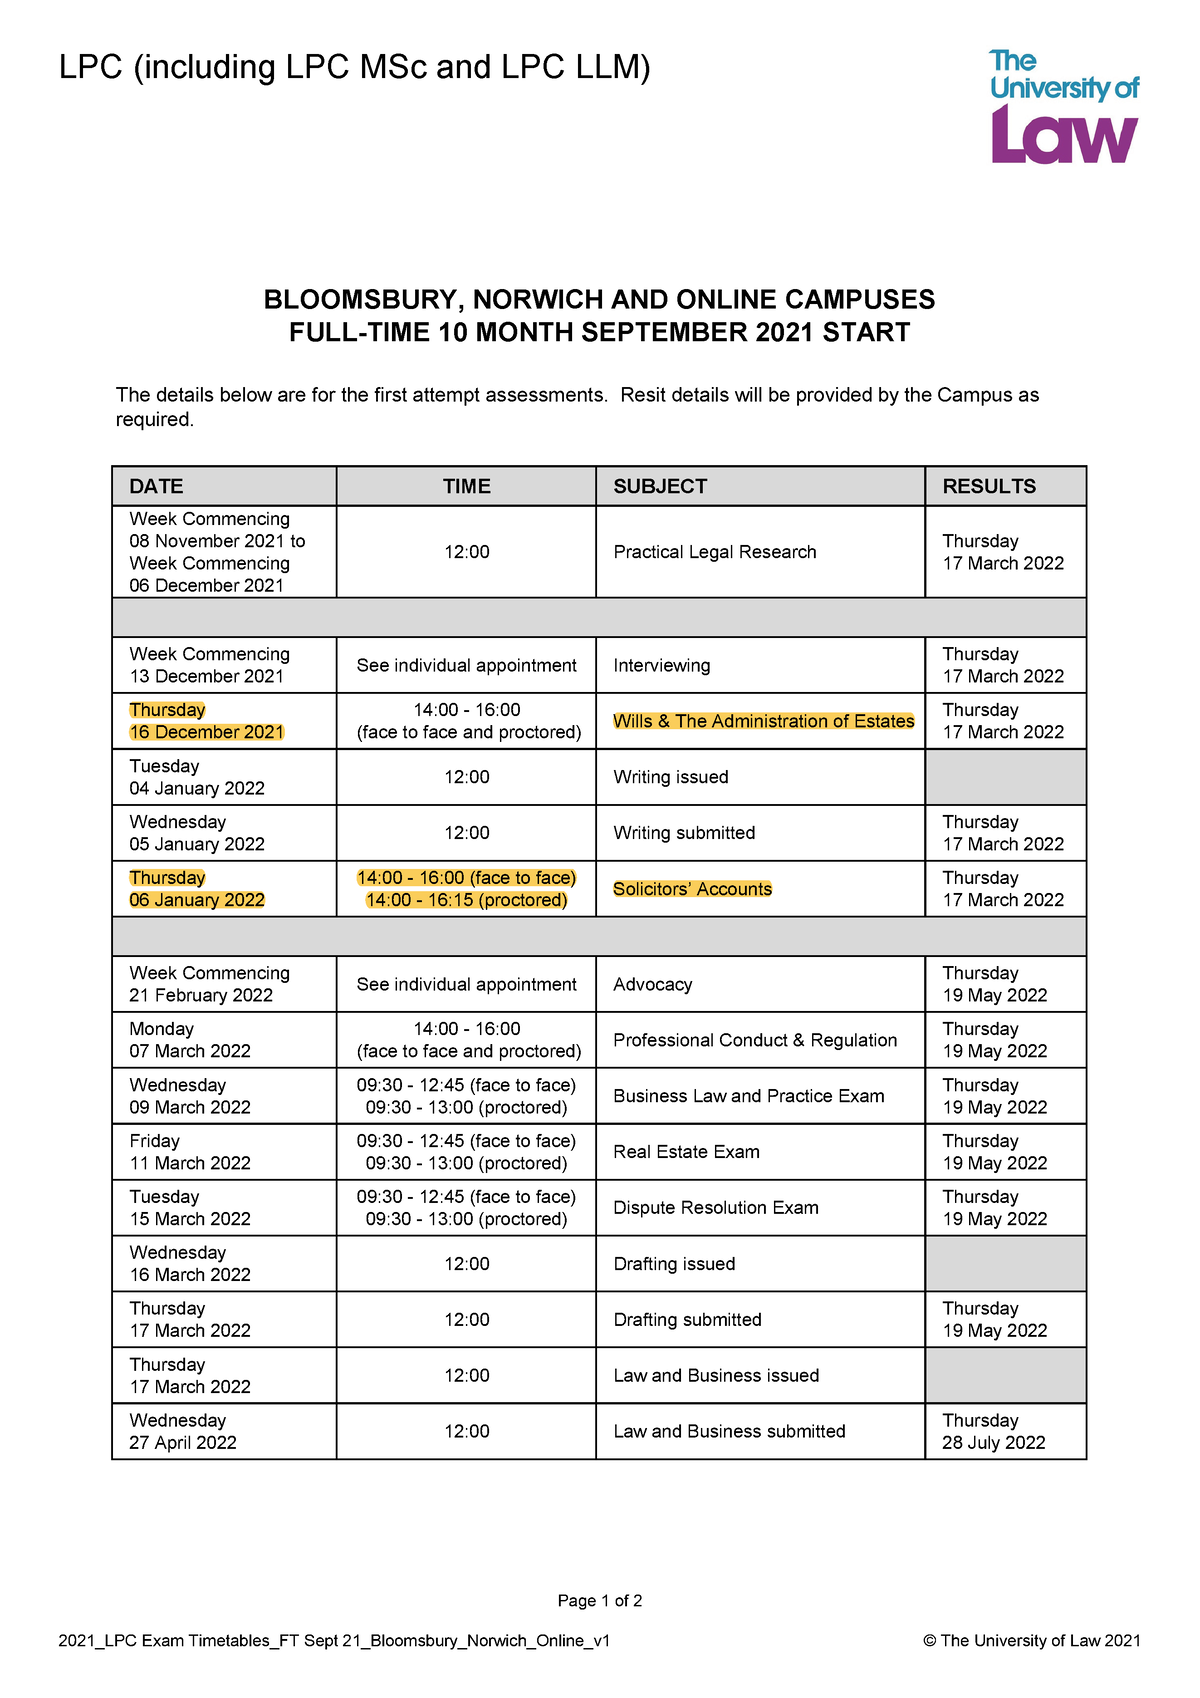 LPC Exam Timetable LPC (including LPC MSc and LPC LLM) DATE TIME